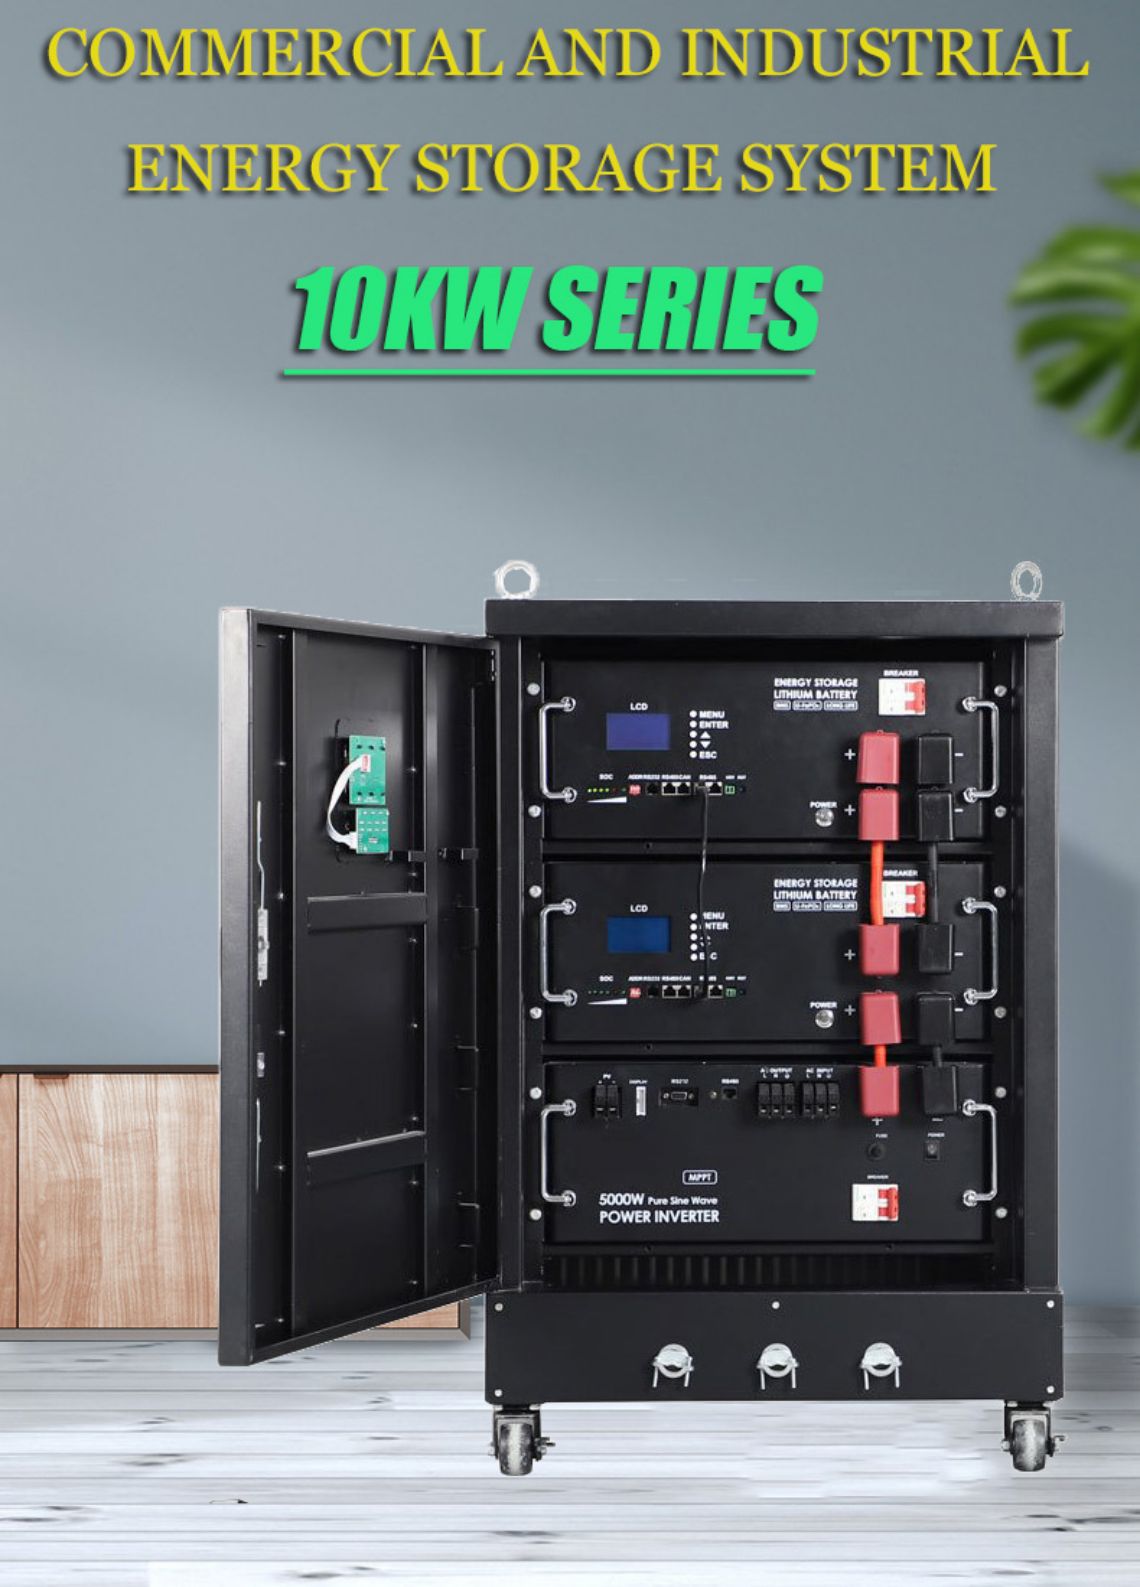 Rack/Cabinet Energy Storage Battery Lithium